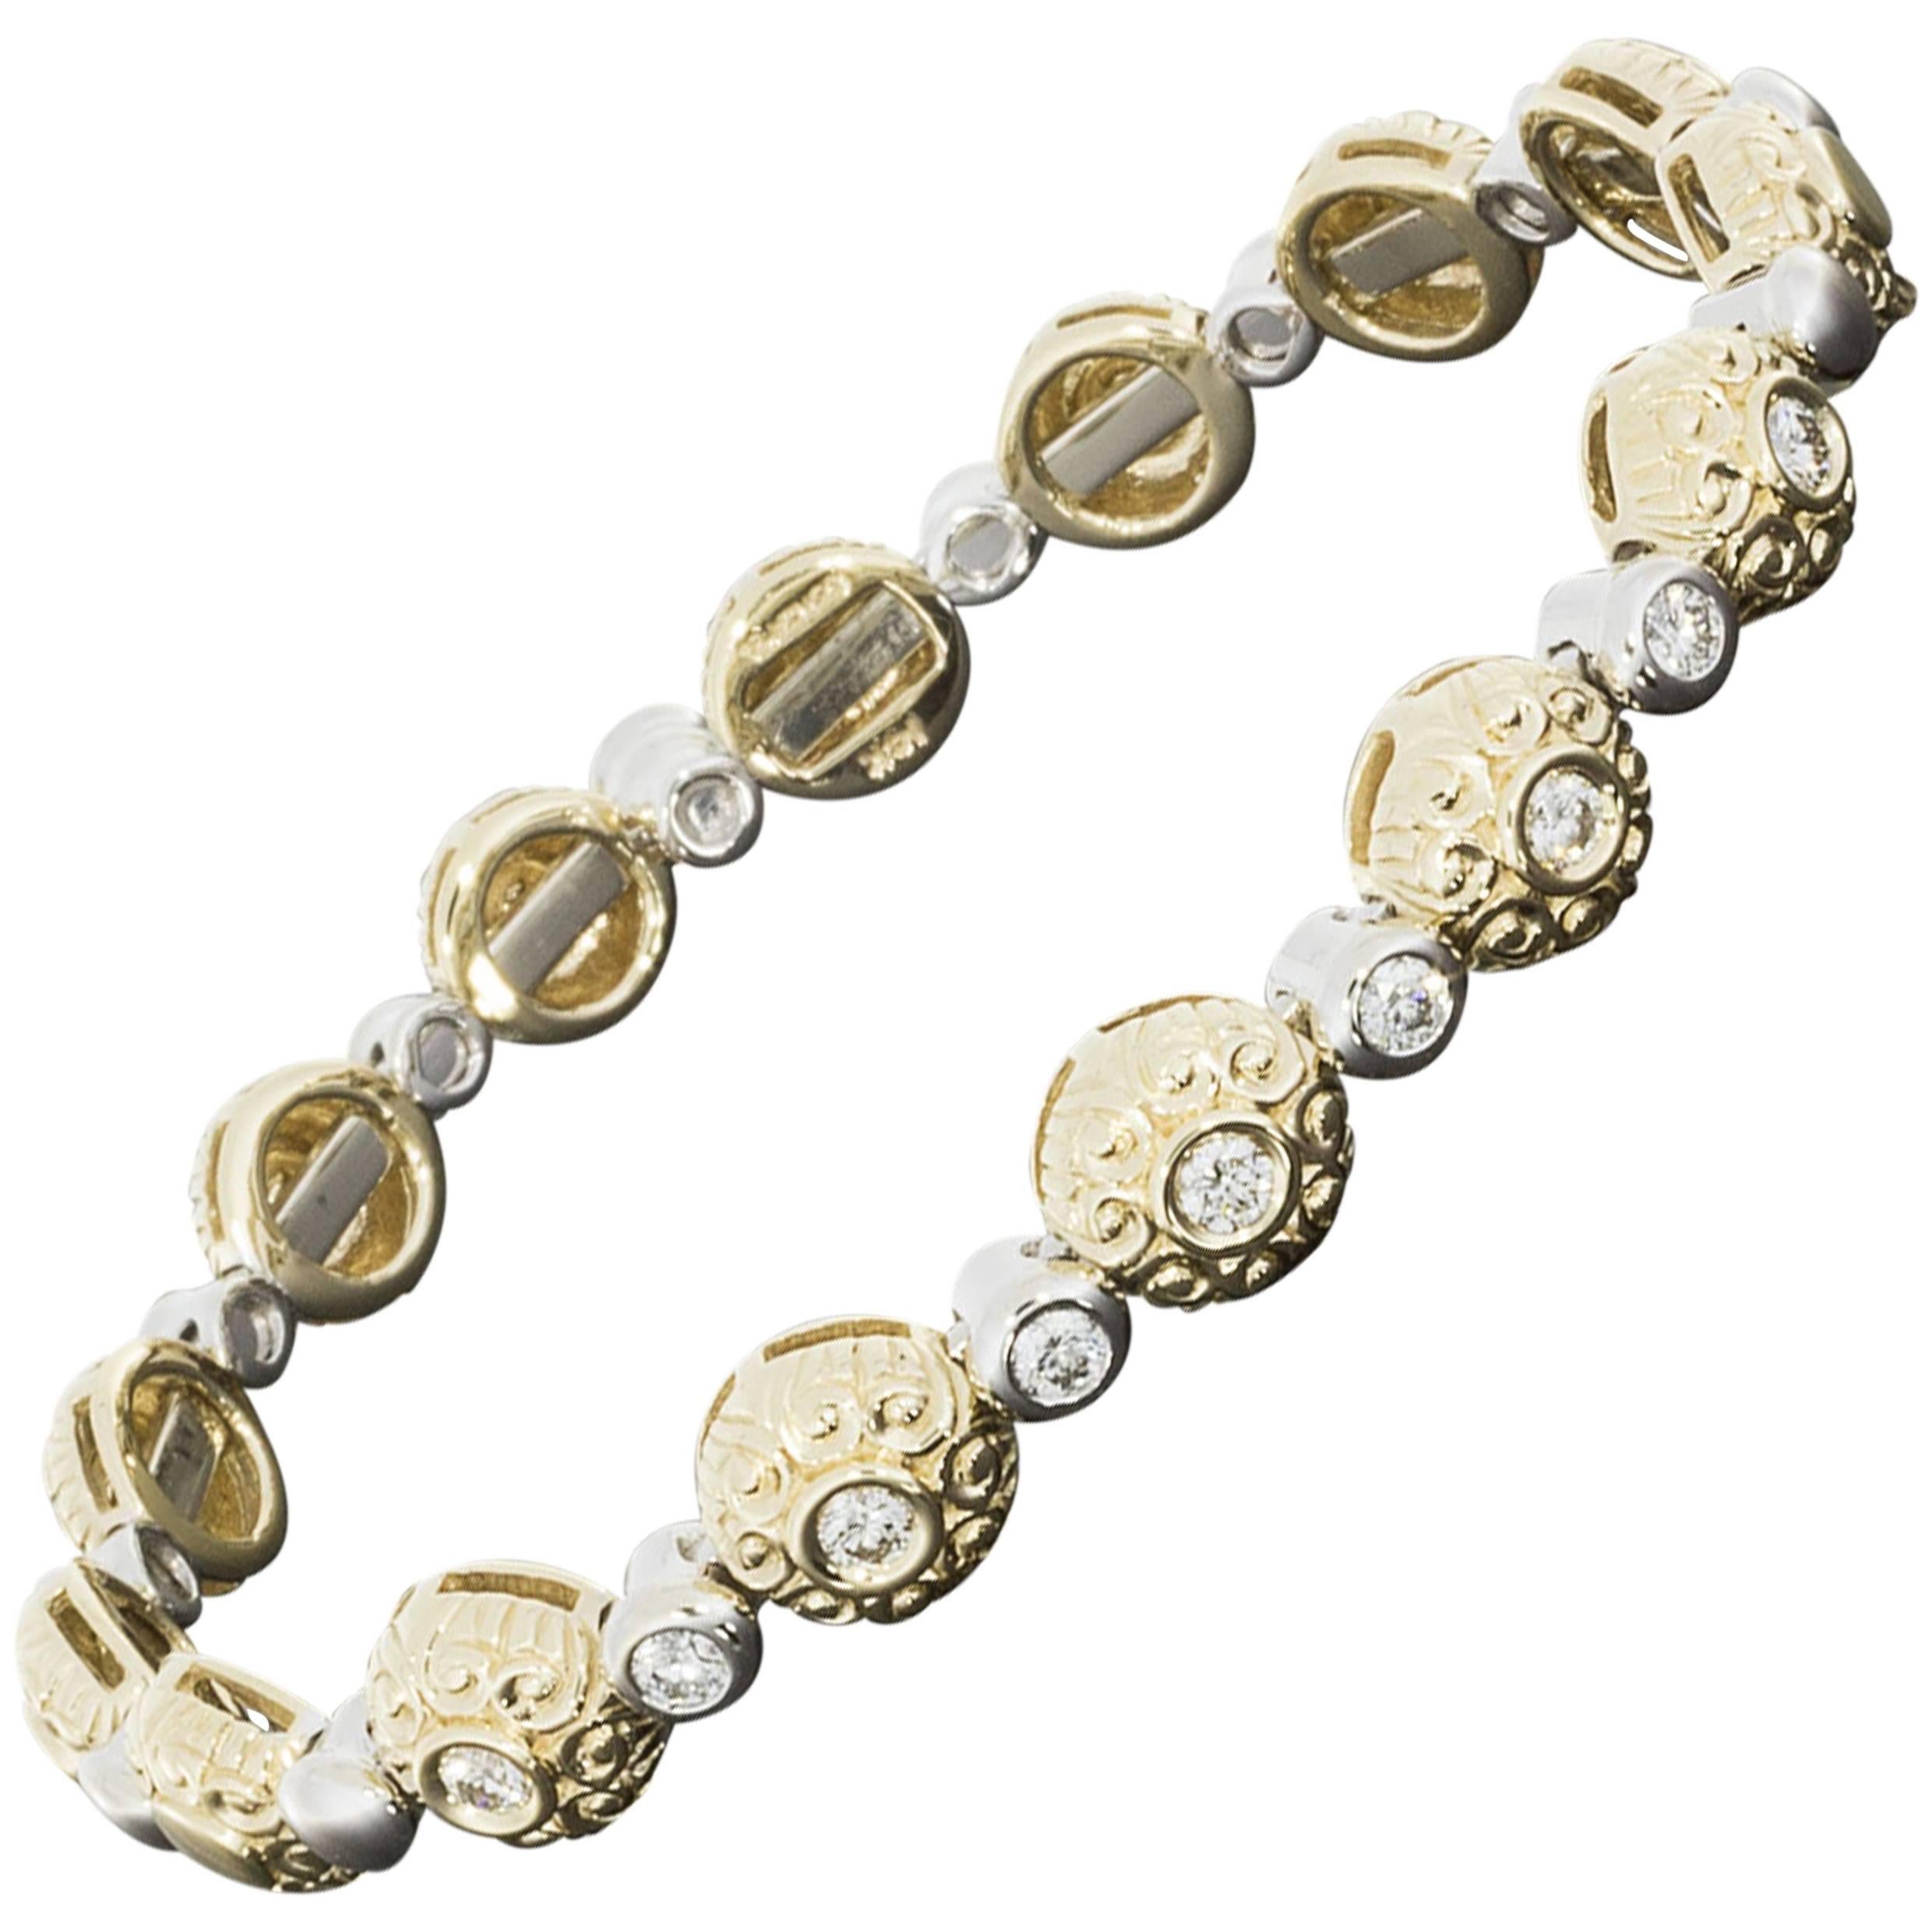 Sonia B Unique Two Tone Gold Diamond Flexible Bangle Bracelet with Scroll Design